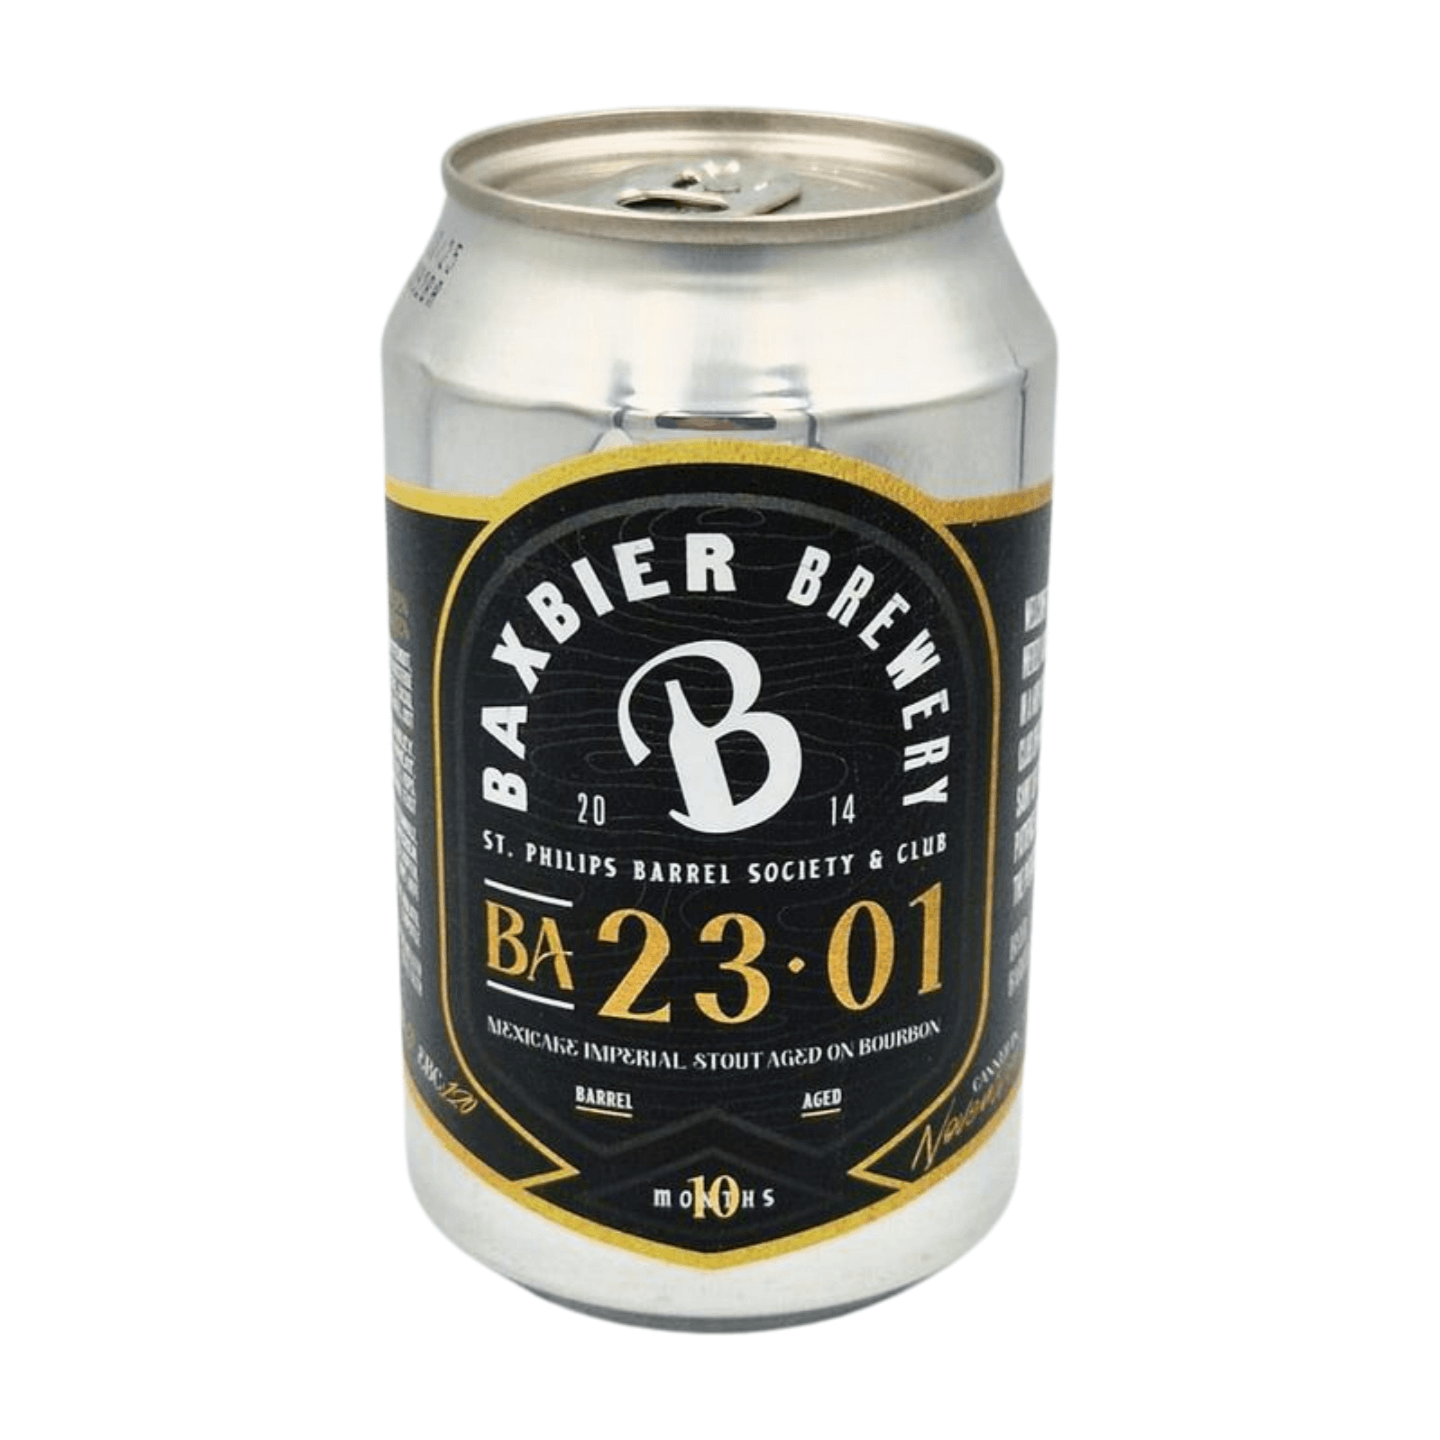 Baxbier BA 23.01 | Bourbon BA Mexican Imperial Stout Webshop Online Verdins Bierwinkel Rotterdam